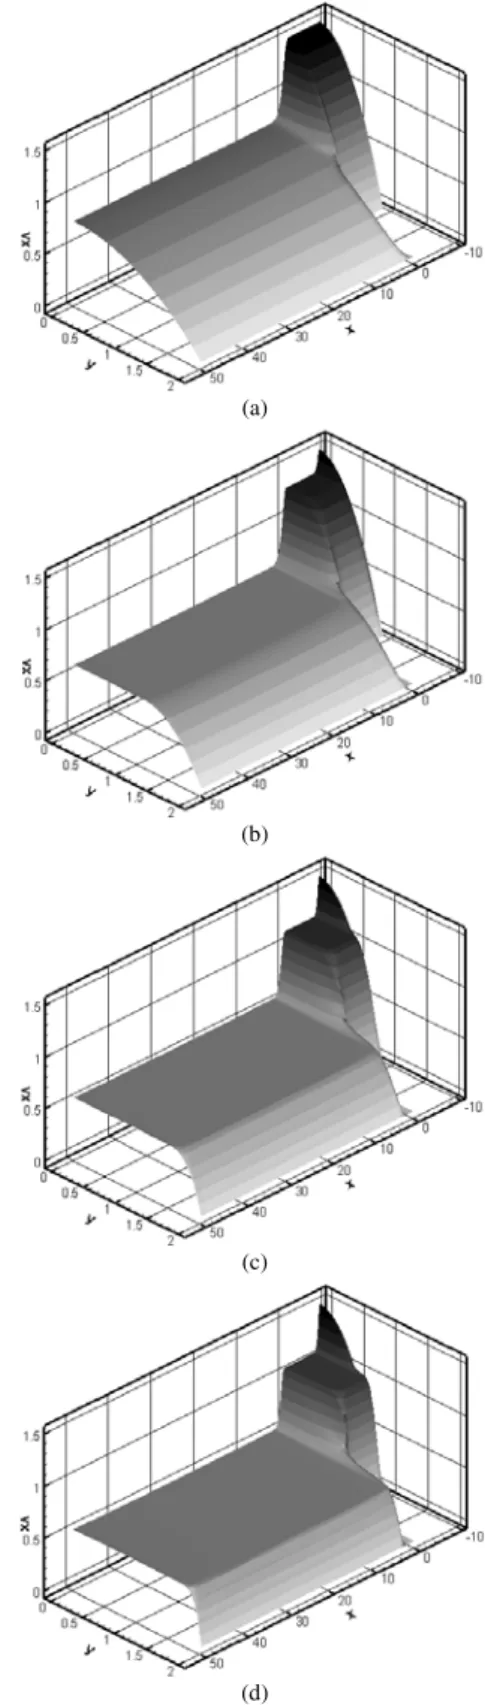 Figure 11. Horizontal velocity elevation plot for planar flows: (a) Bn=0.2; 